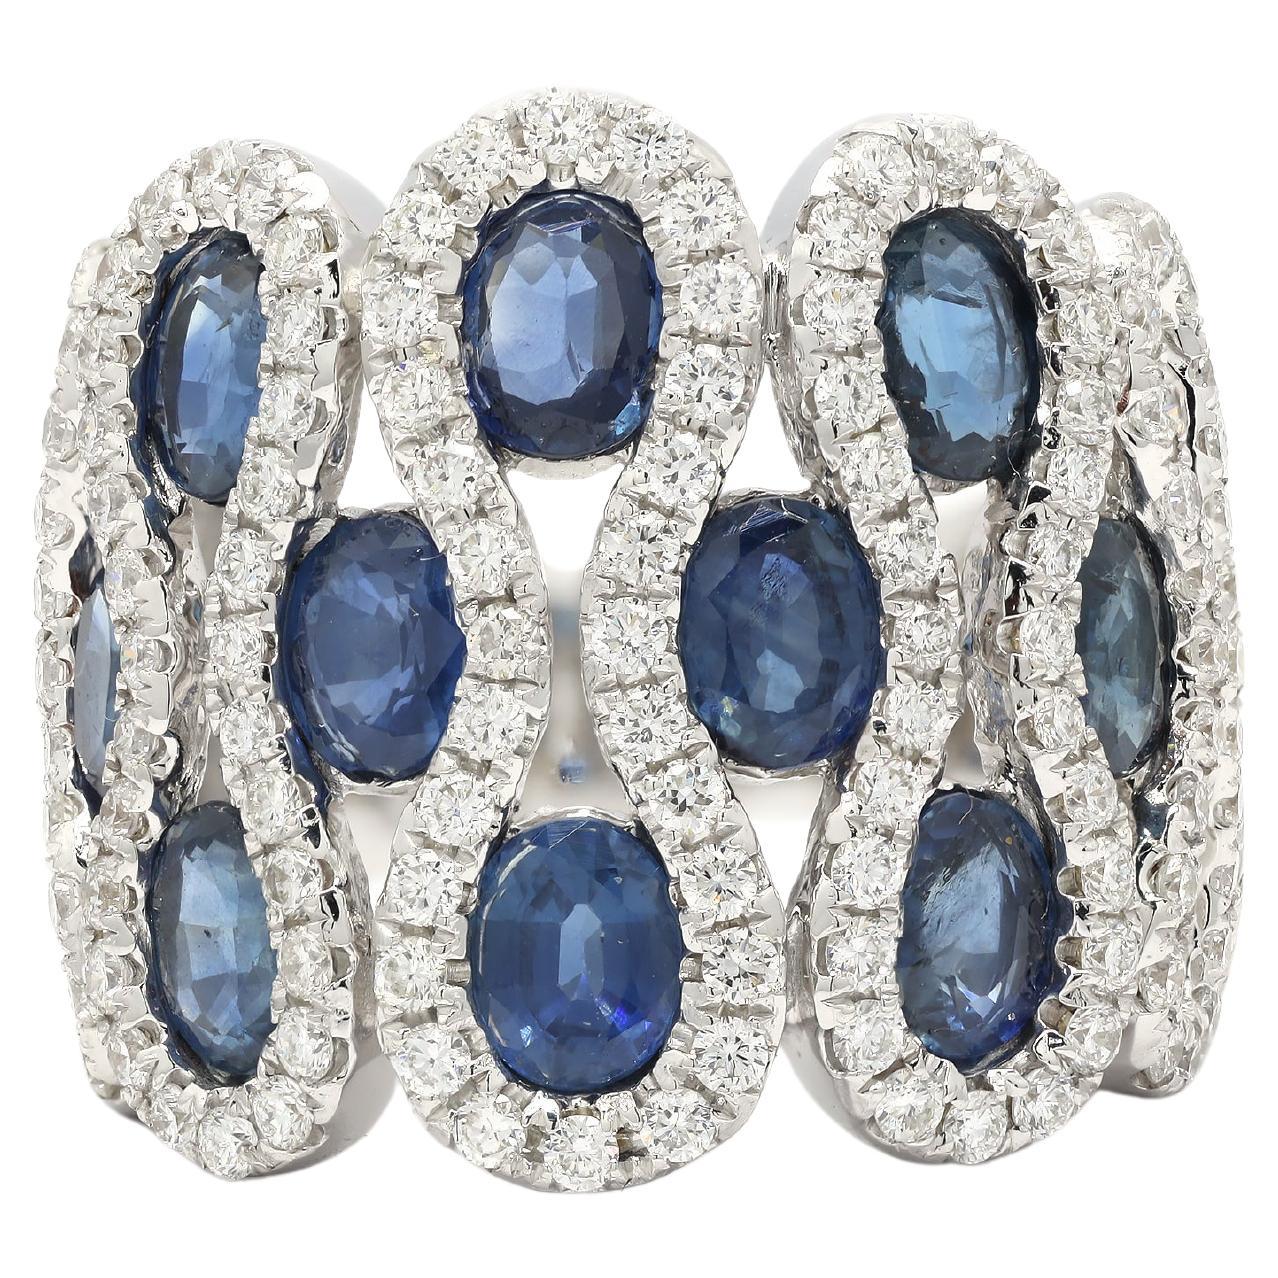 Blue Sapphire Cluster Diamond Ring in 14K White Gold 